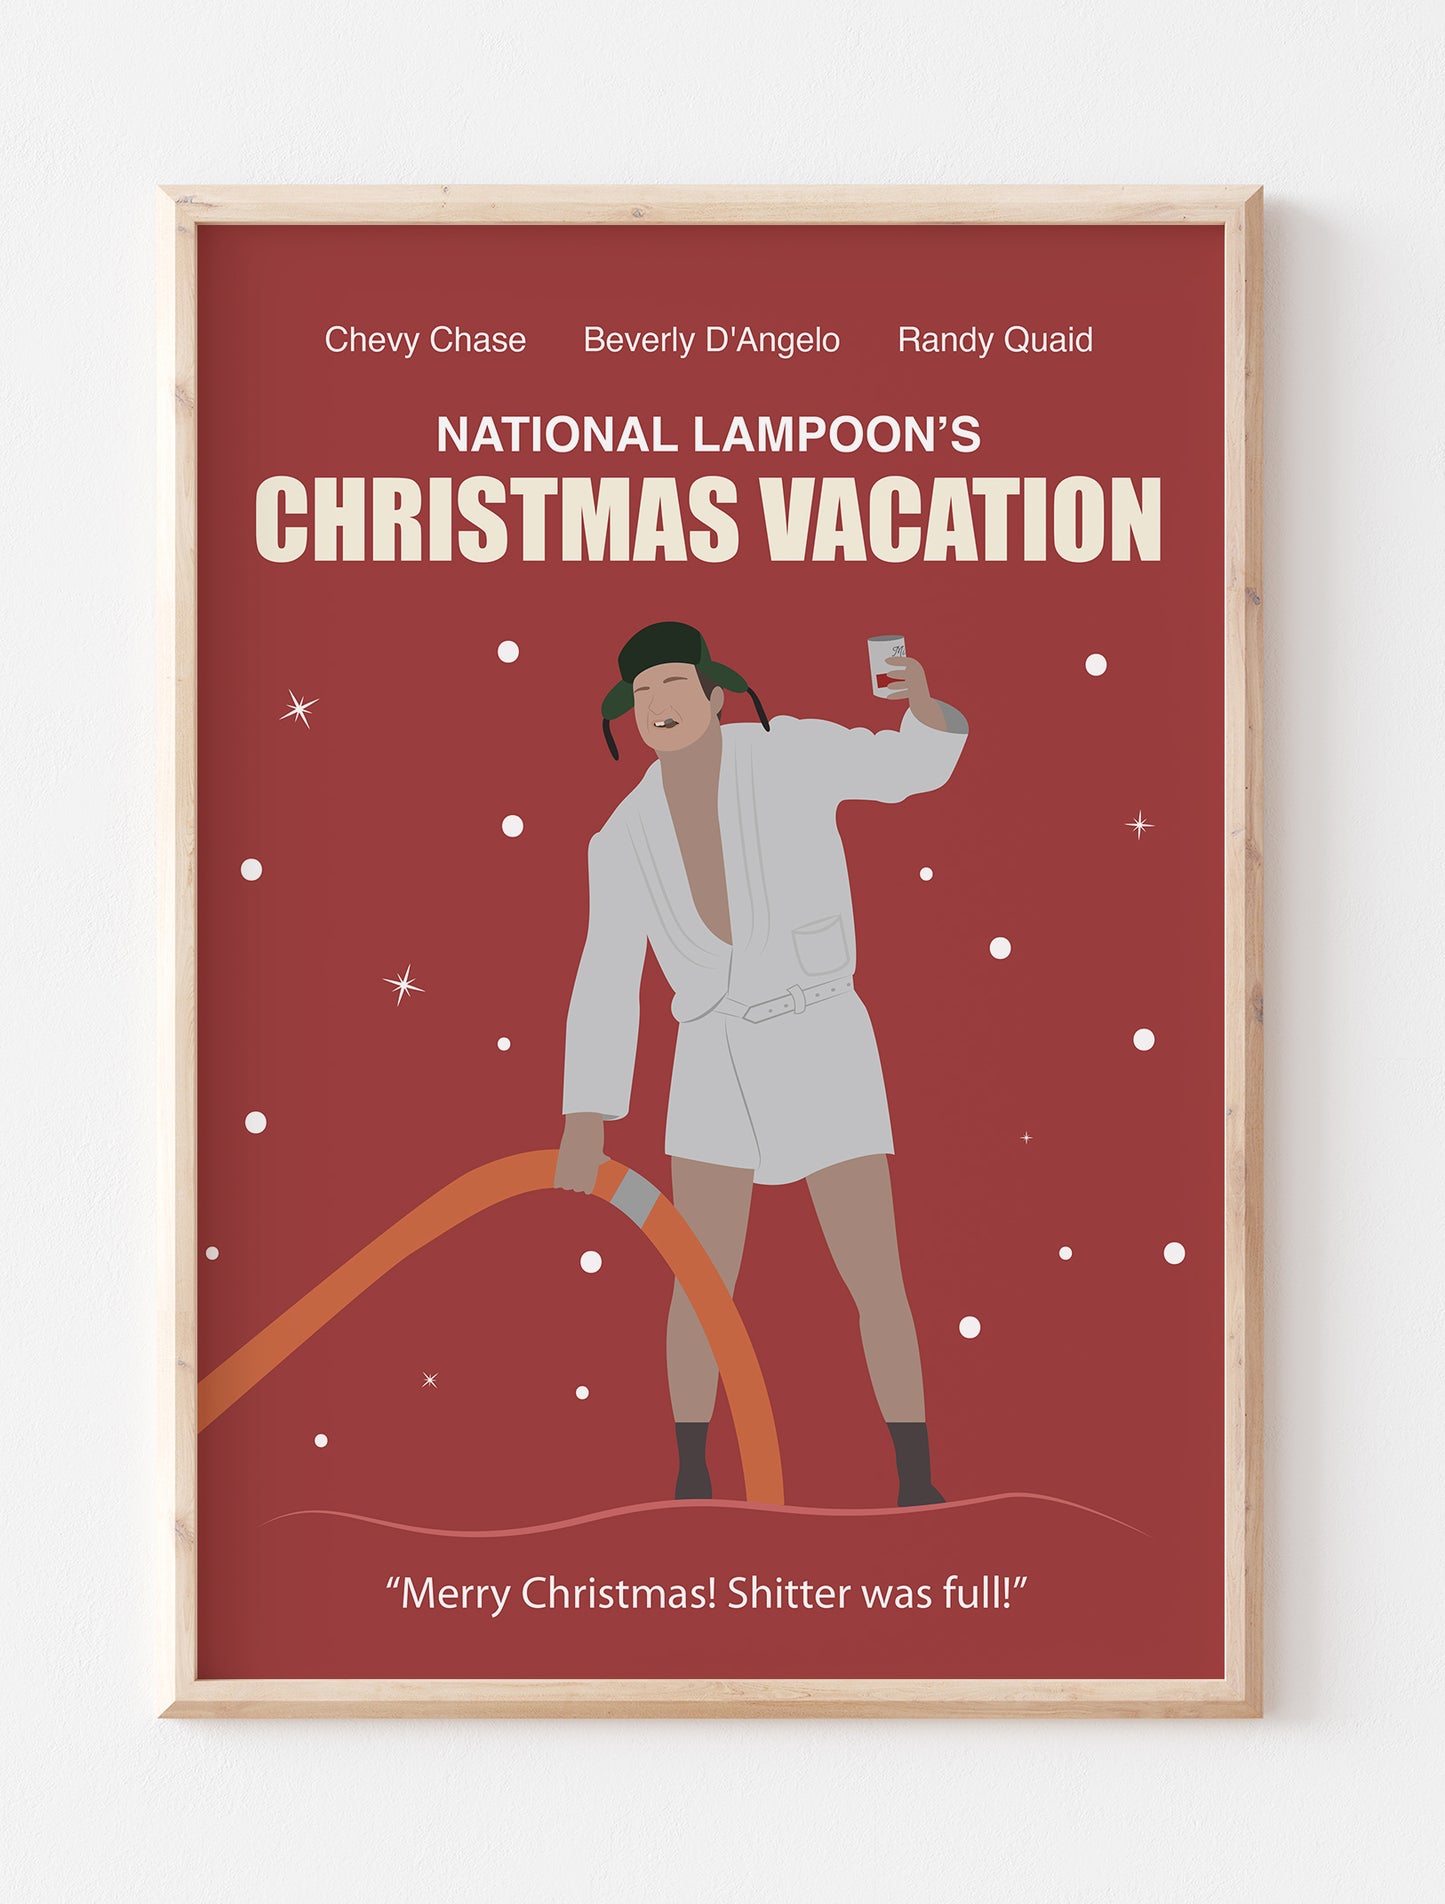 Christmas Vacation Minimalist Poster - Cousin Eddie